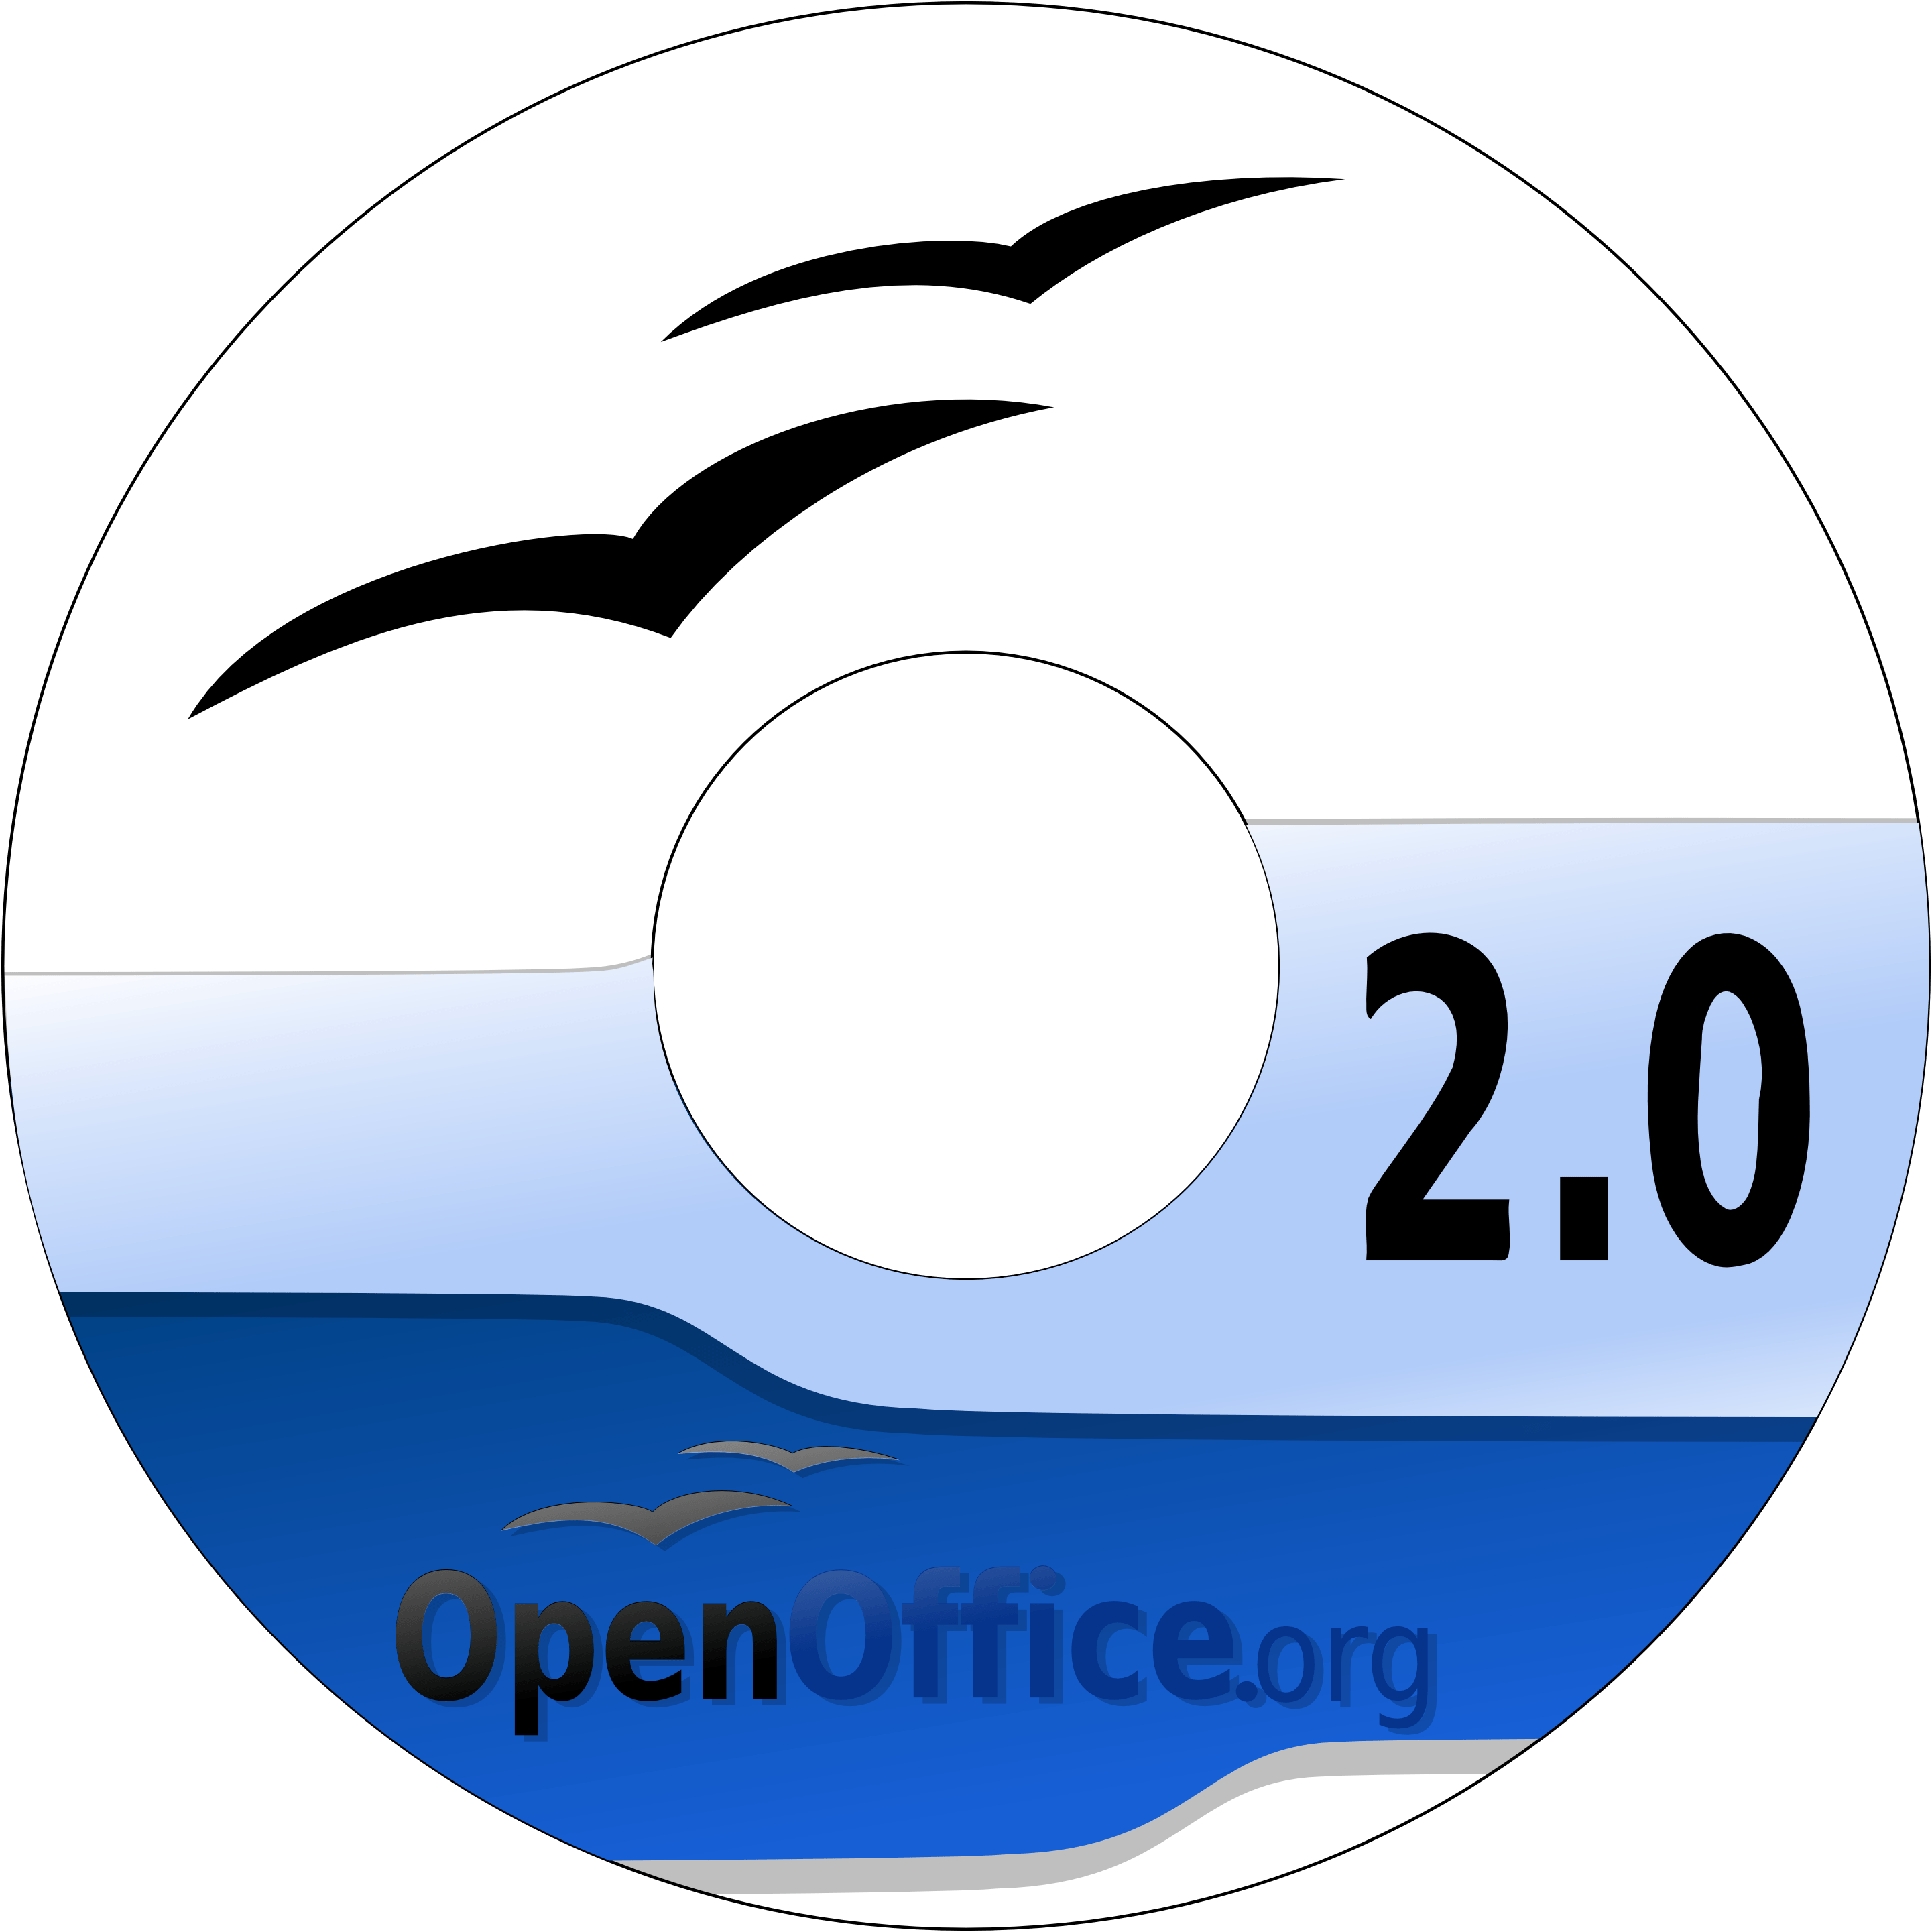 OpenOffice Logo - OpenOffice.org CD Art - previous versions